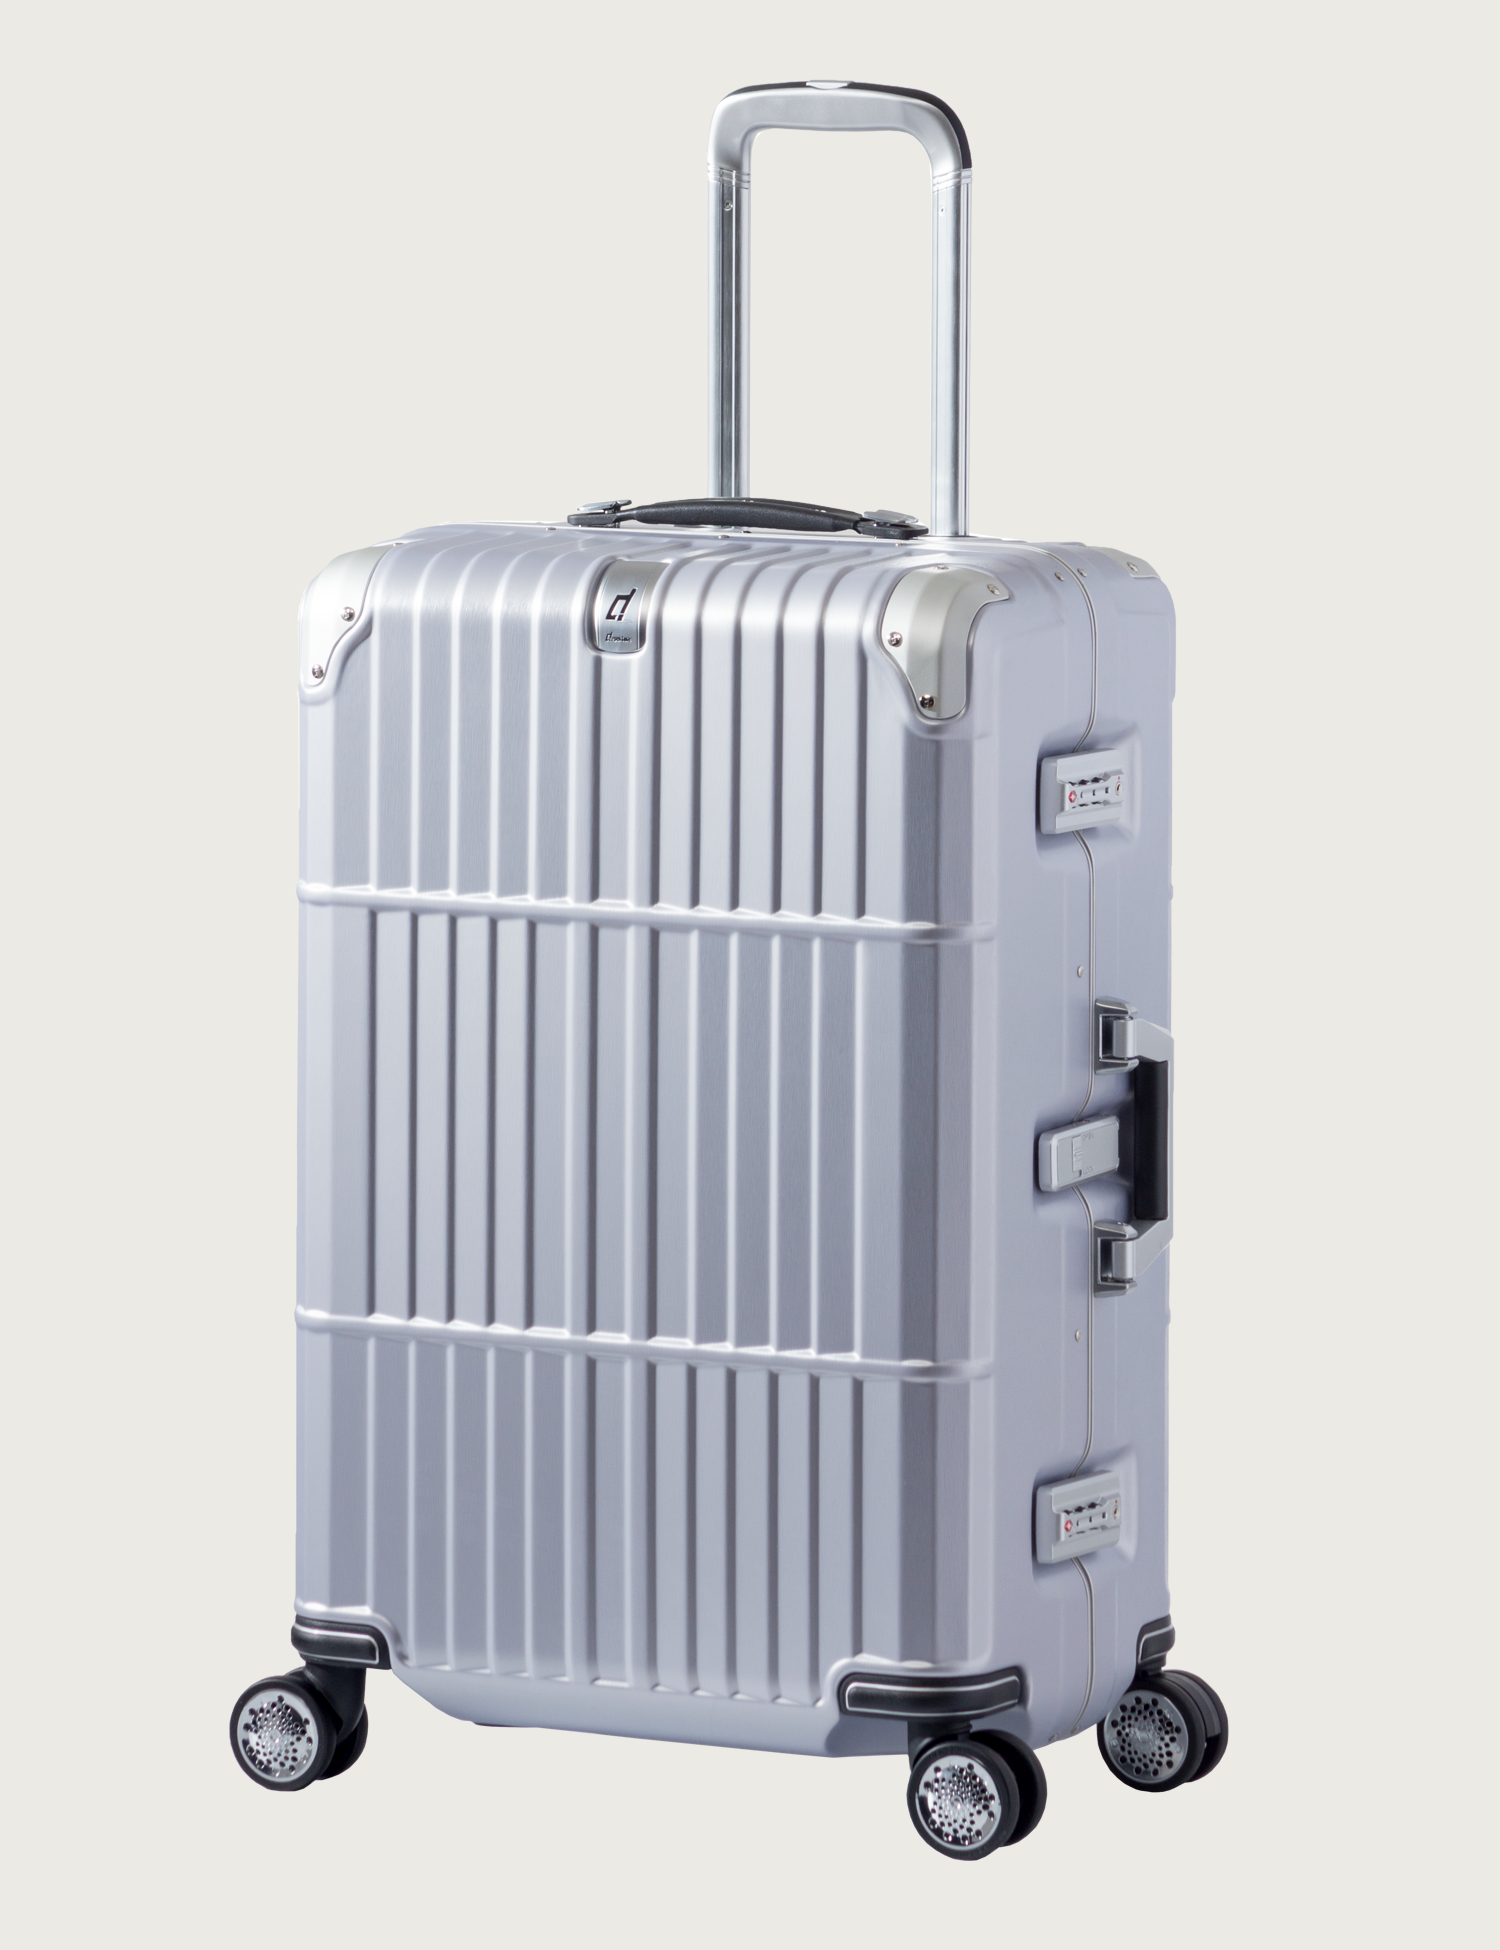 departure ディパーチャー アジア・ラゲージのスーツケース | アジア